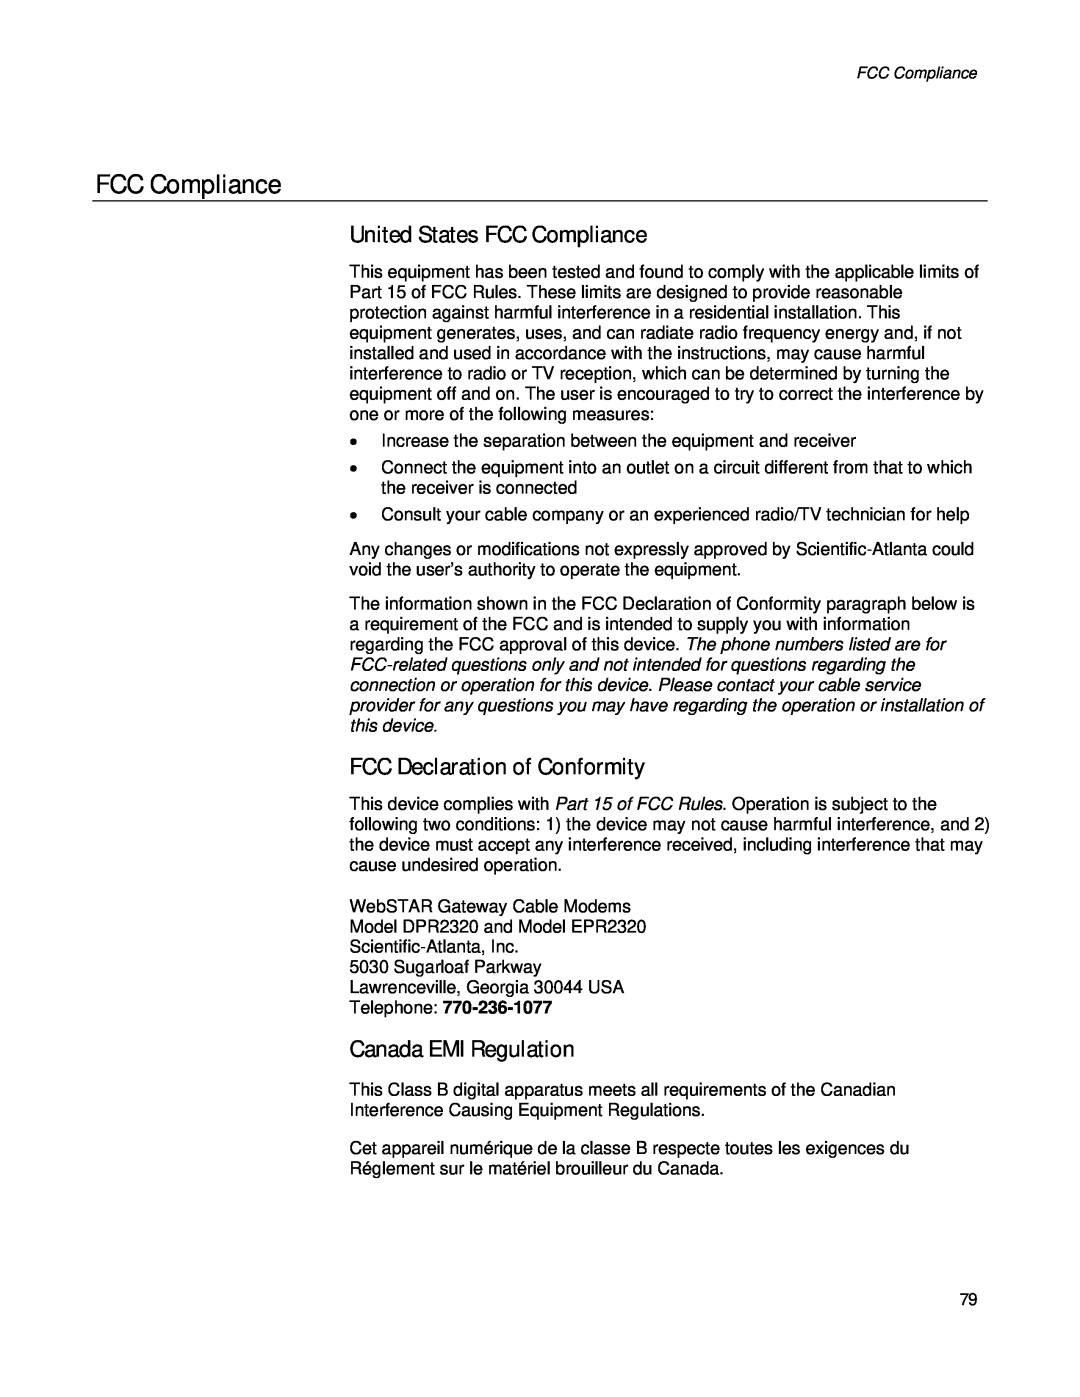 Apple EPR2320TM, DPR2320TM manual United States FCC Compliance, FCC Declaration of Conformity, Canada EMI Regulation 